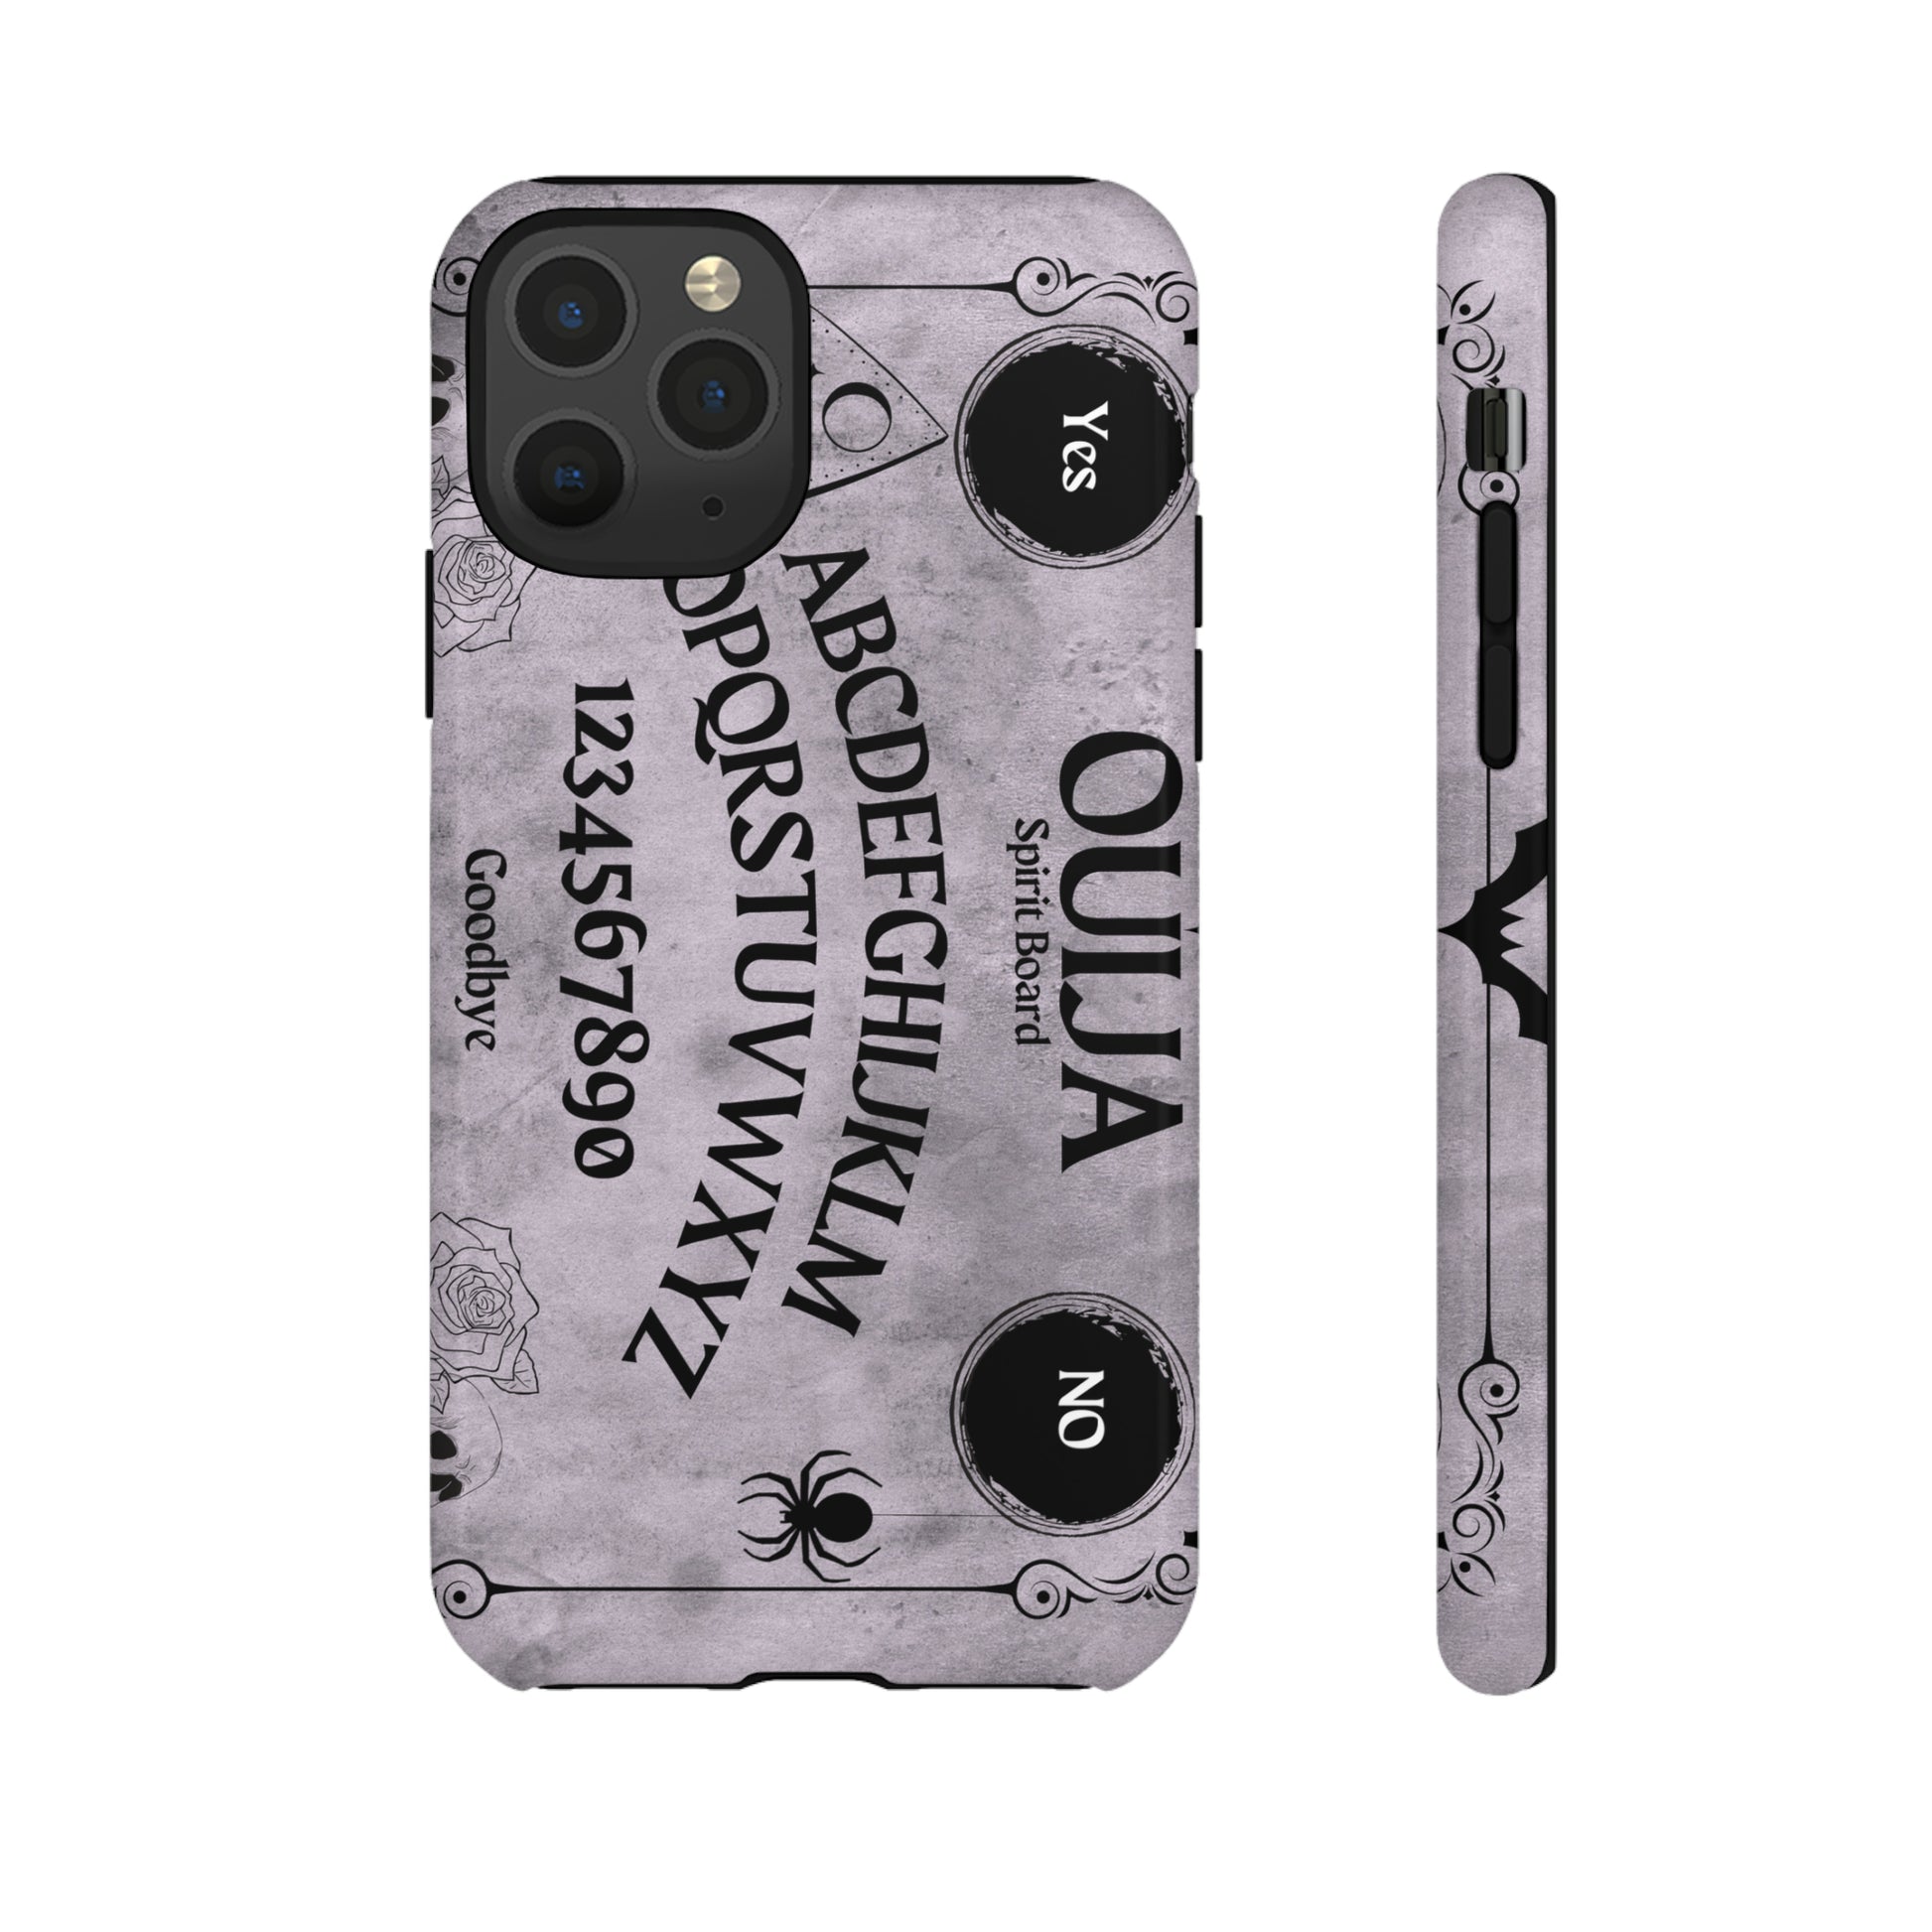 Ouija Board Tough Phone Cases For Samsung iPhone GooglePhone CaseVTZdesignsiPhone 11 ProGlossyAccessoriesGlossyhalloween